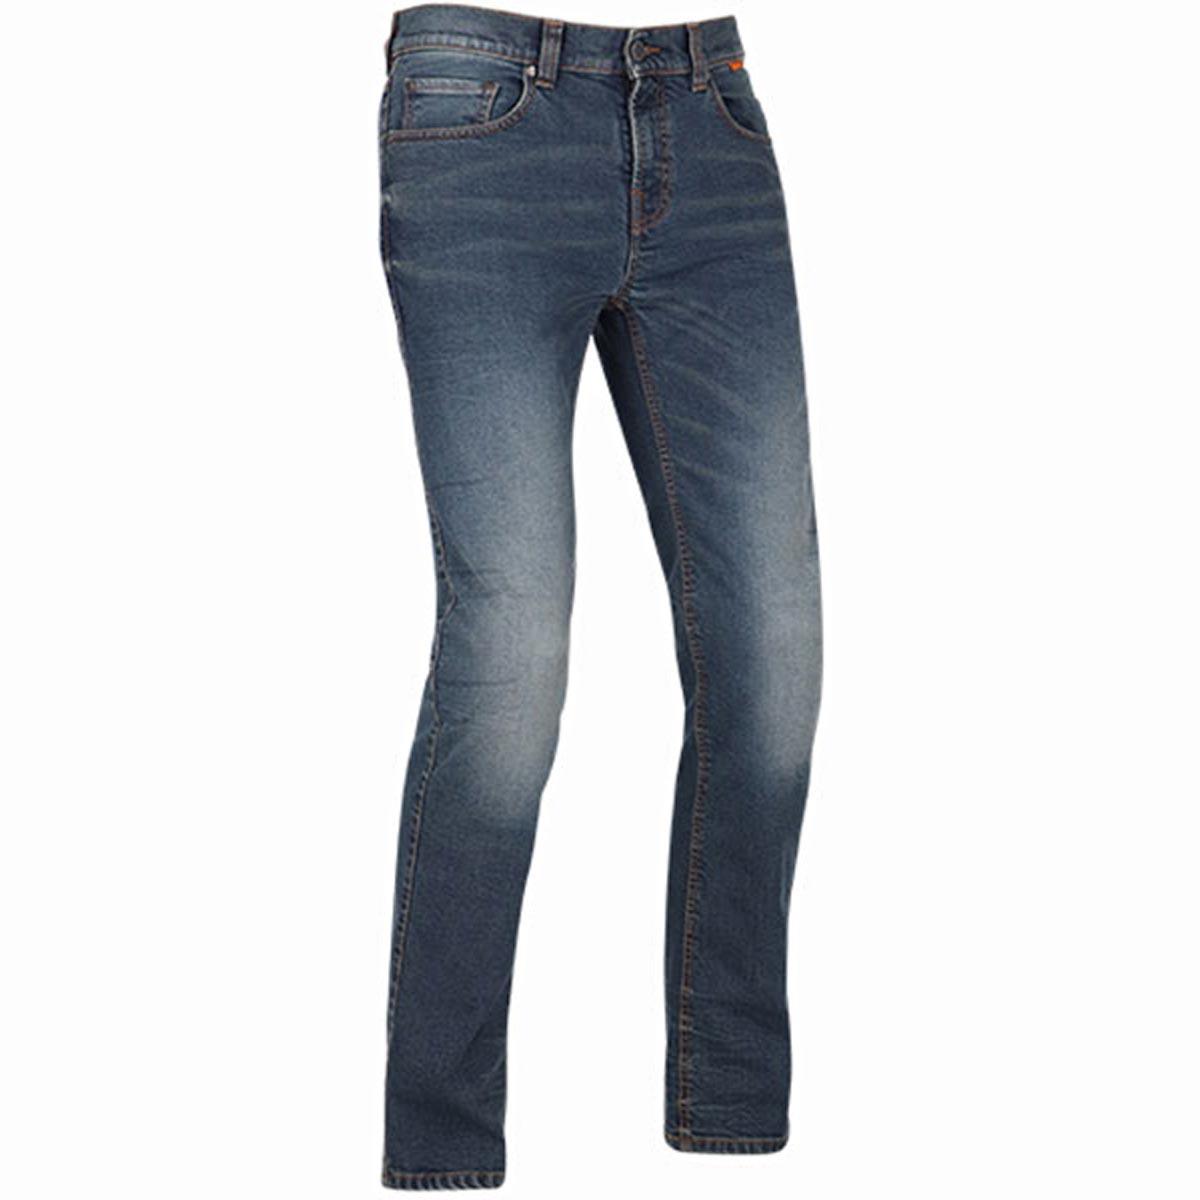 Richa Original 2 Slim Cut Jeans Washed Blue 32in Leg 44in Waist